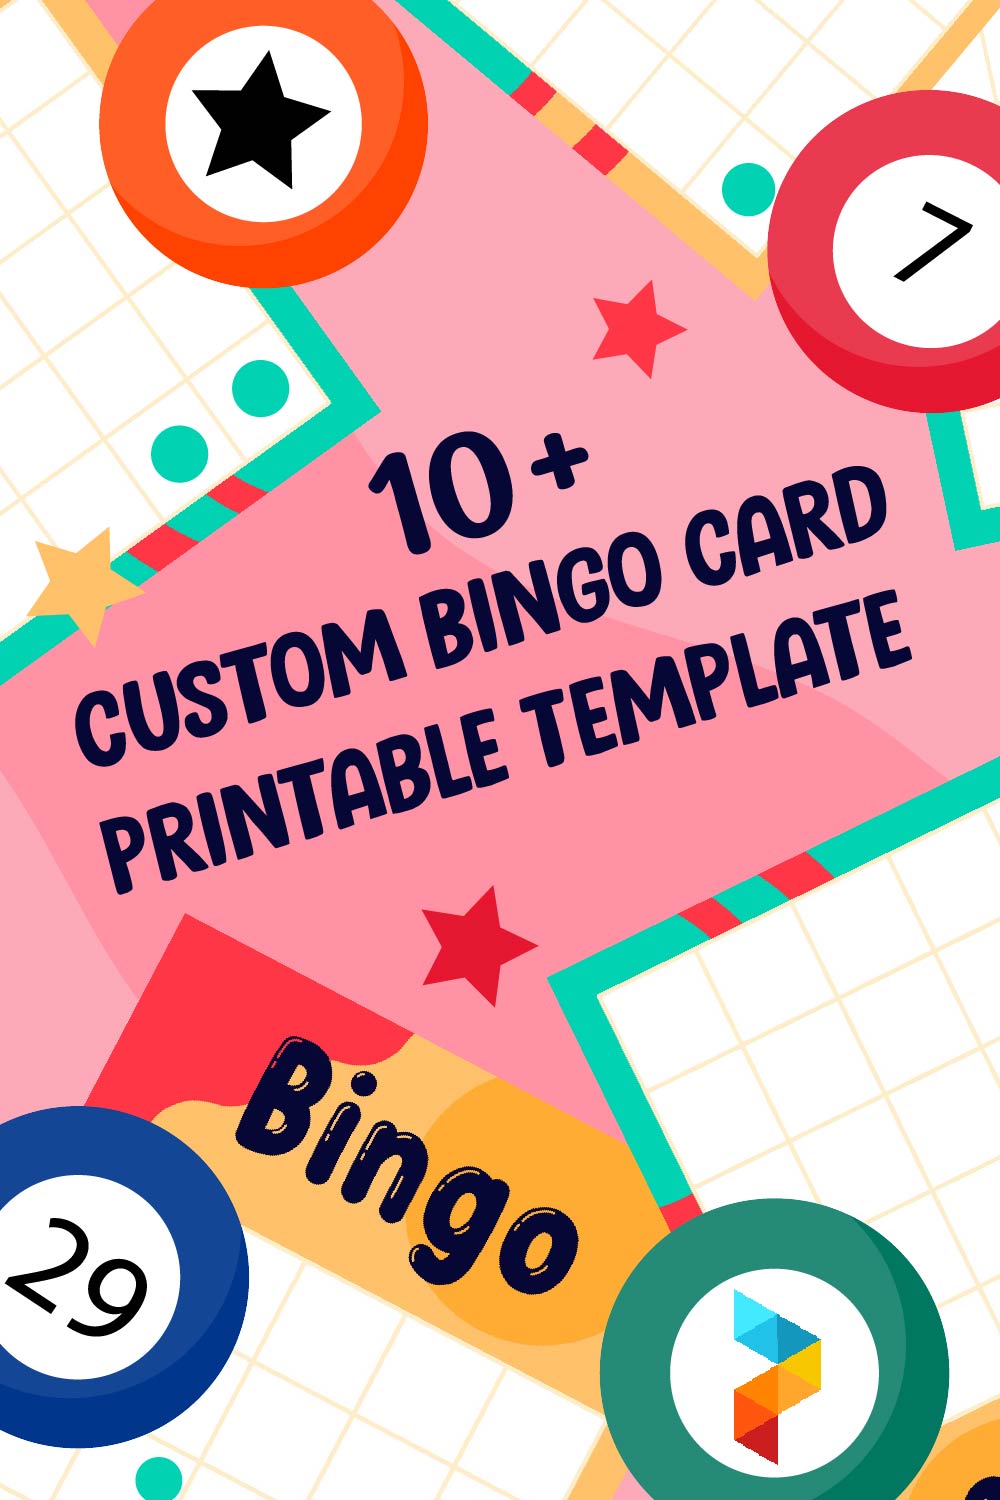 Custom Bingo Card Printable Template